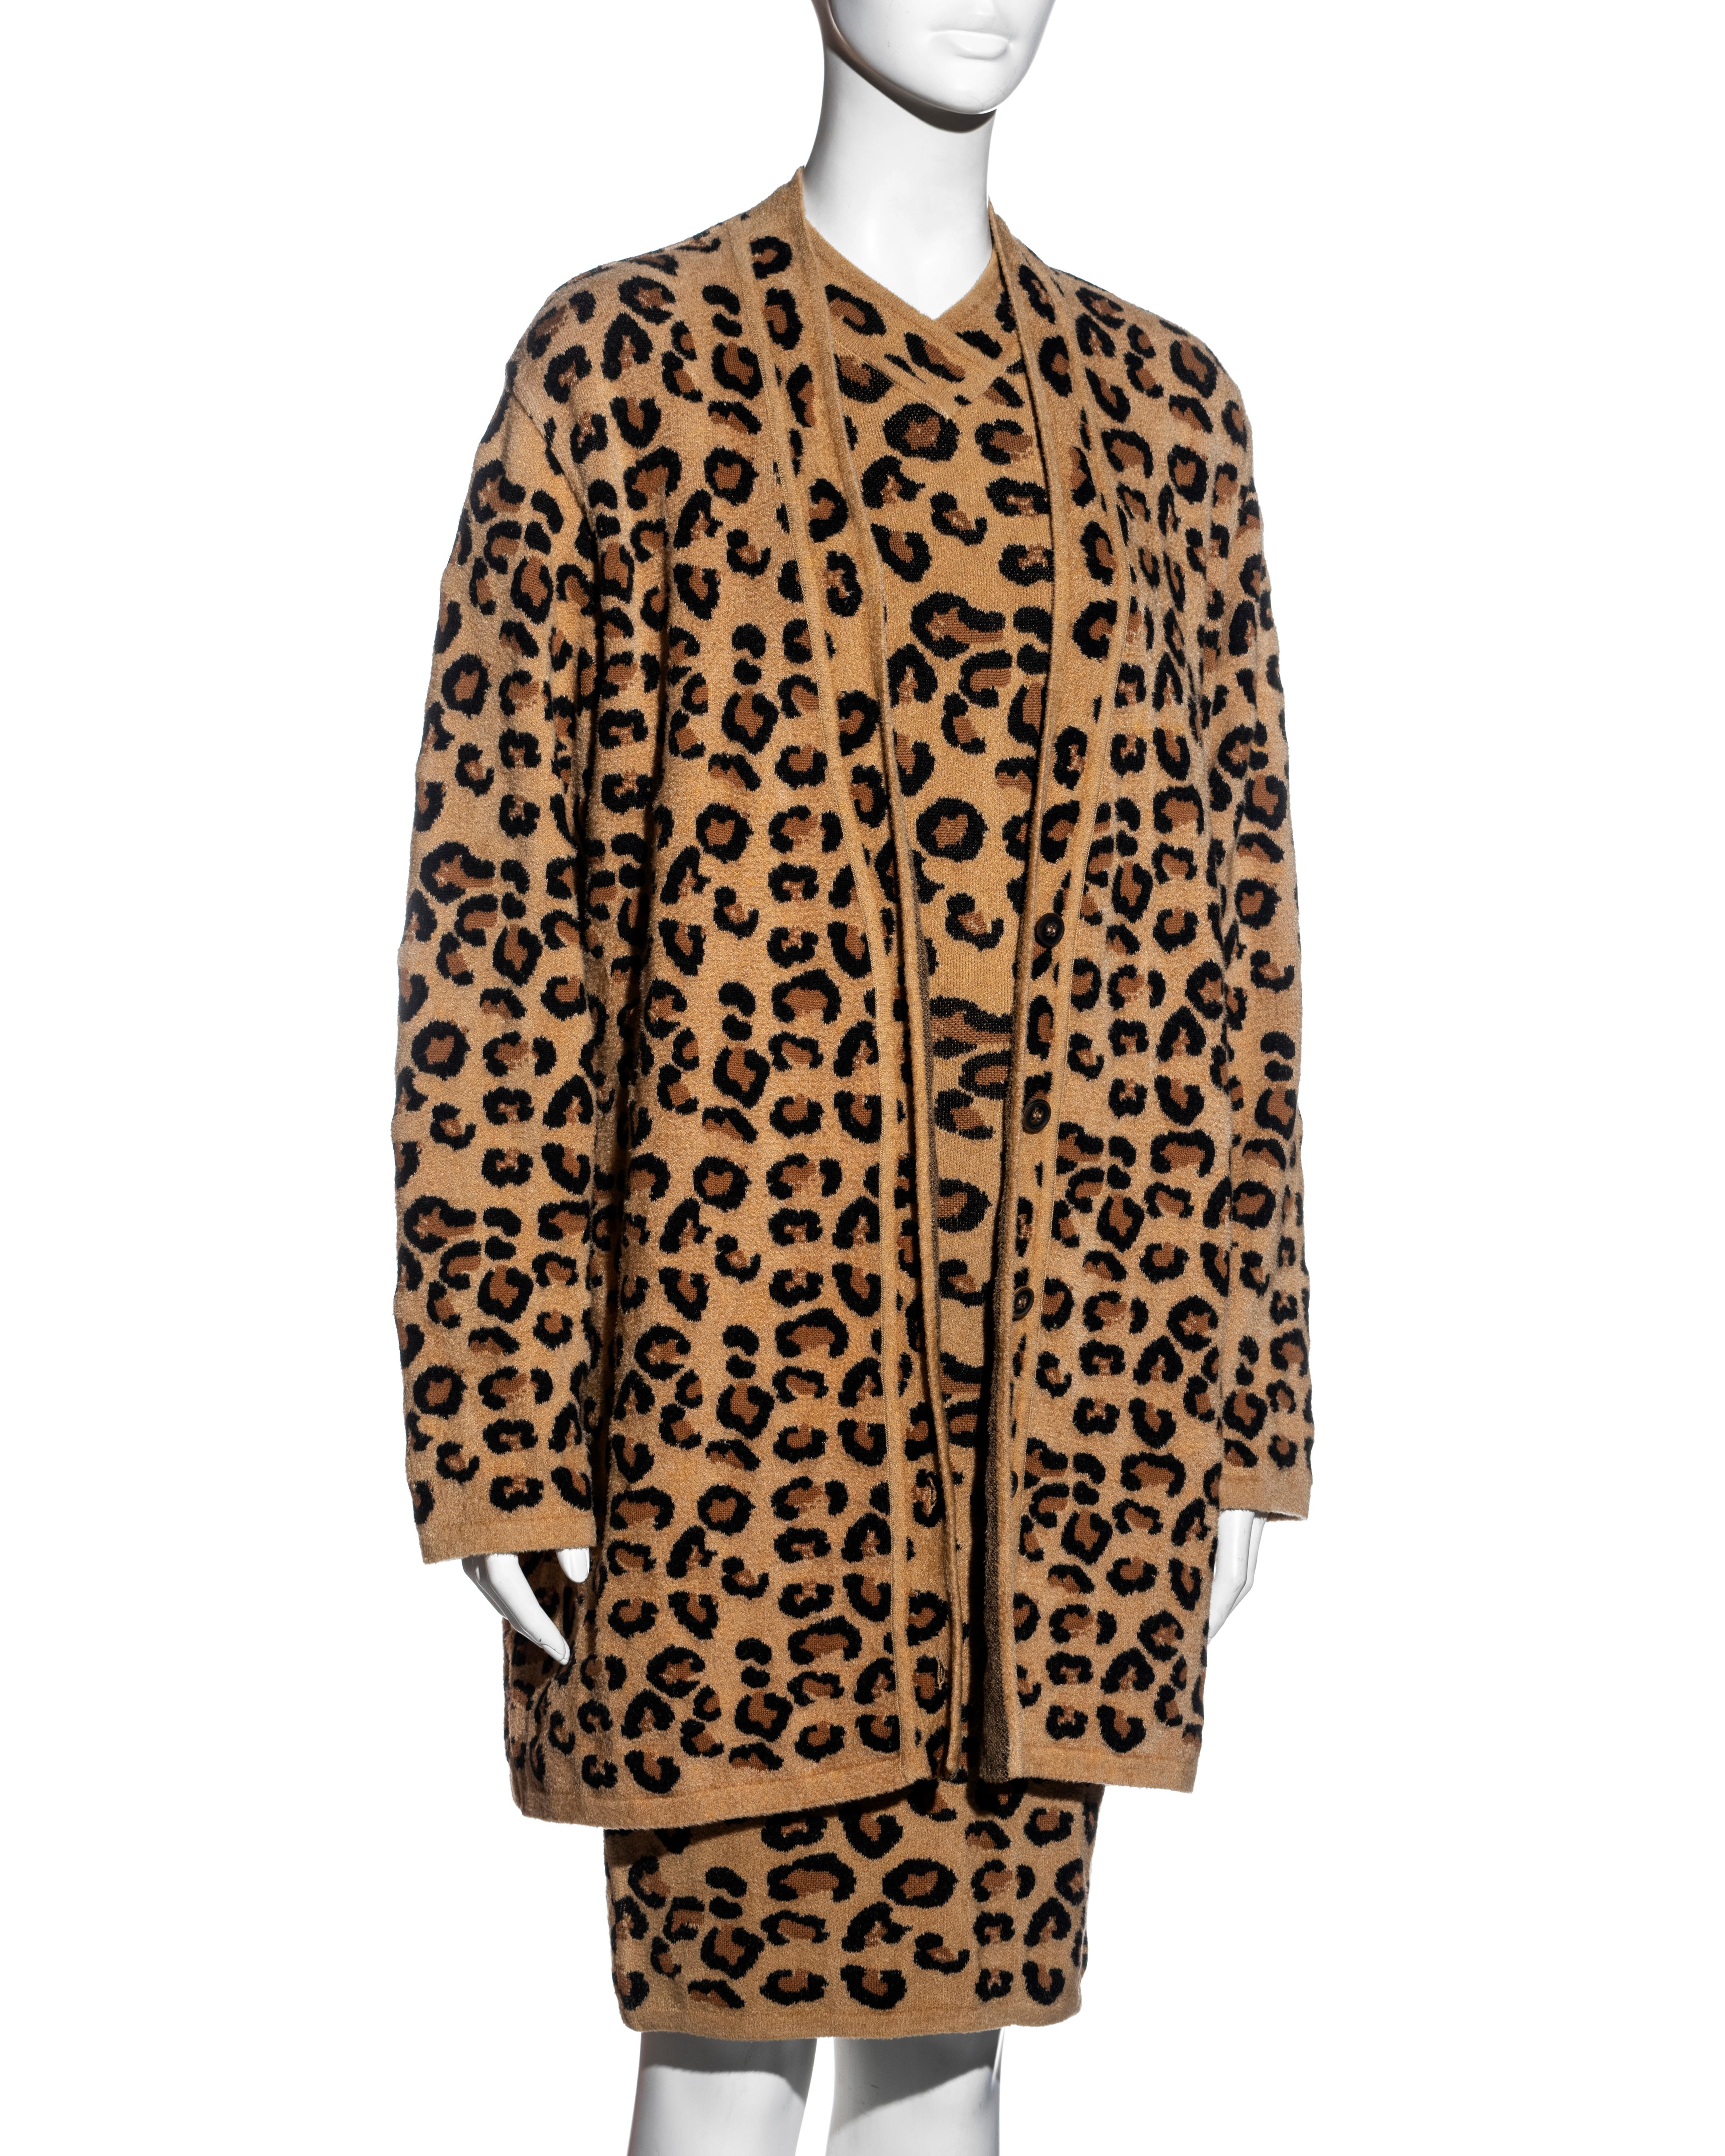 Azzedine Alaia leopard wool dress, cardigan, skirt and leggings set, fw 1991 For Sale 2